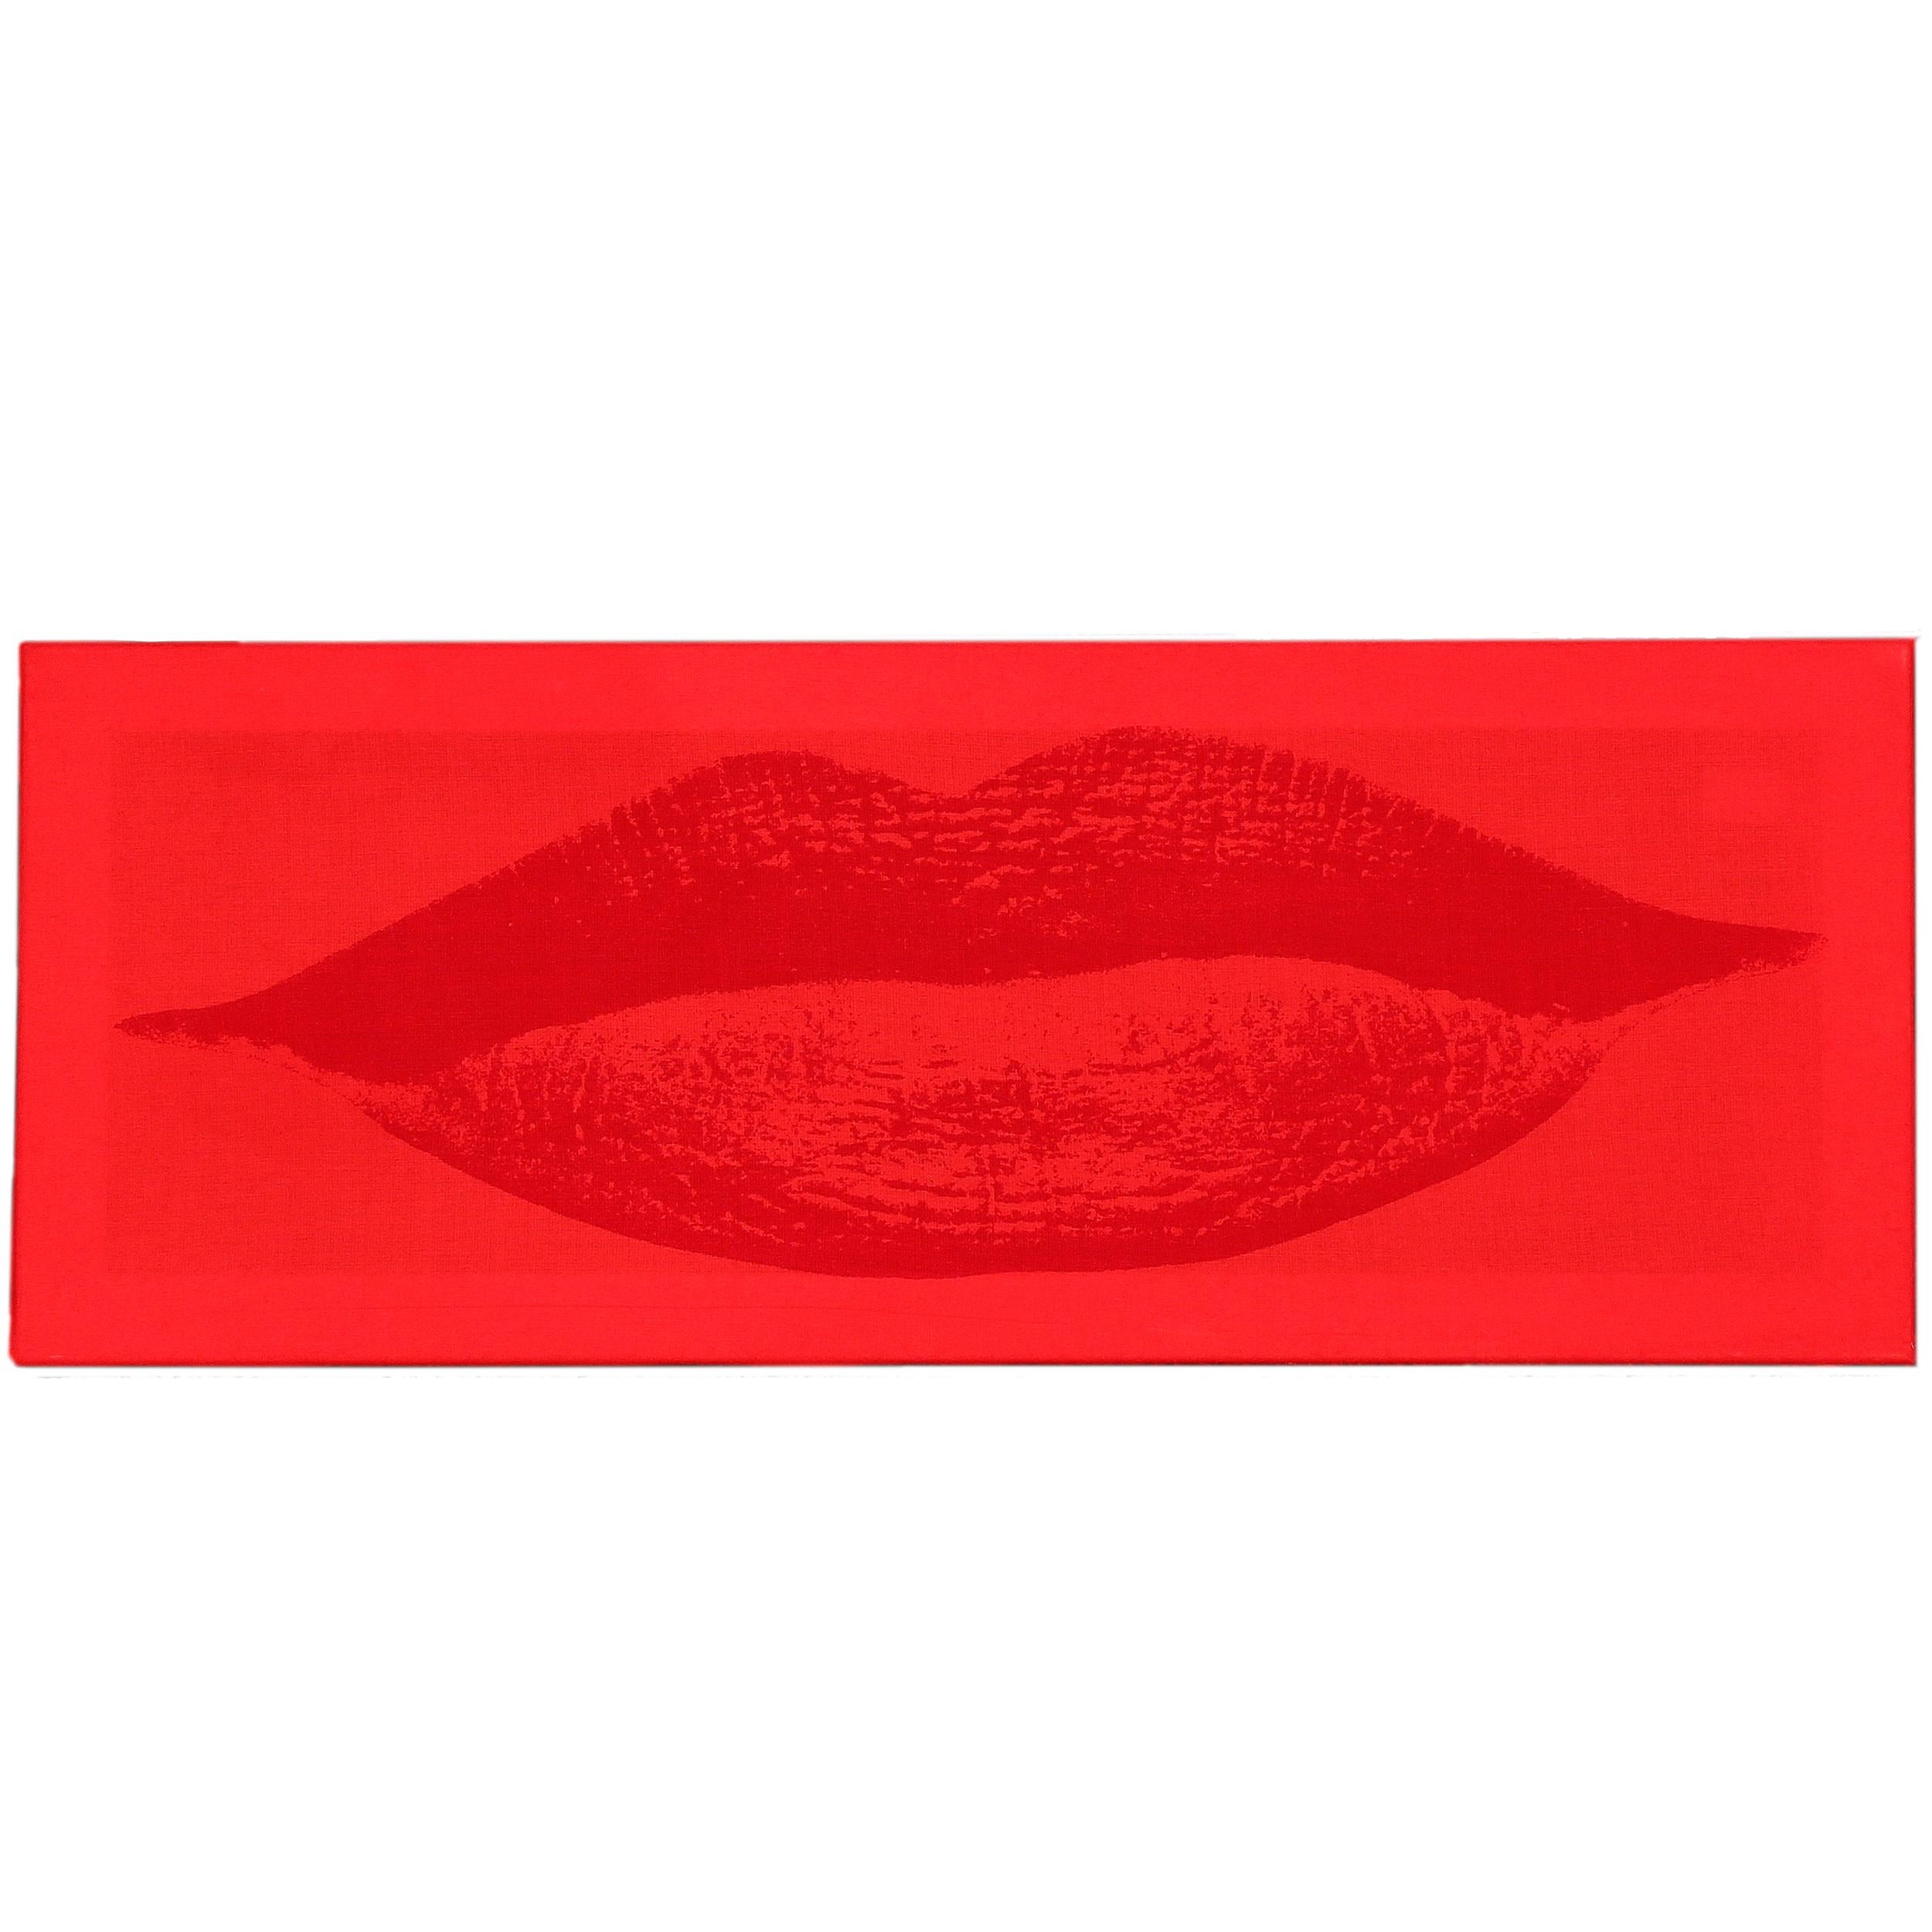 Swiss Design Lips by Verner Panton For Sale